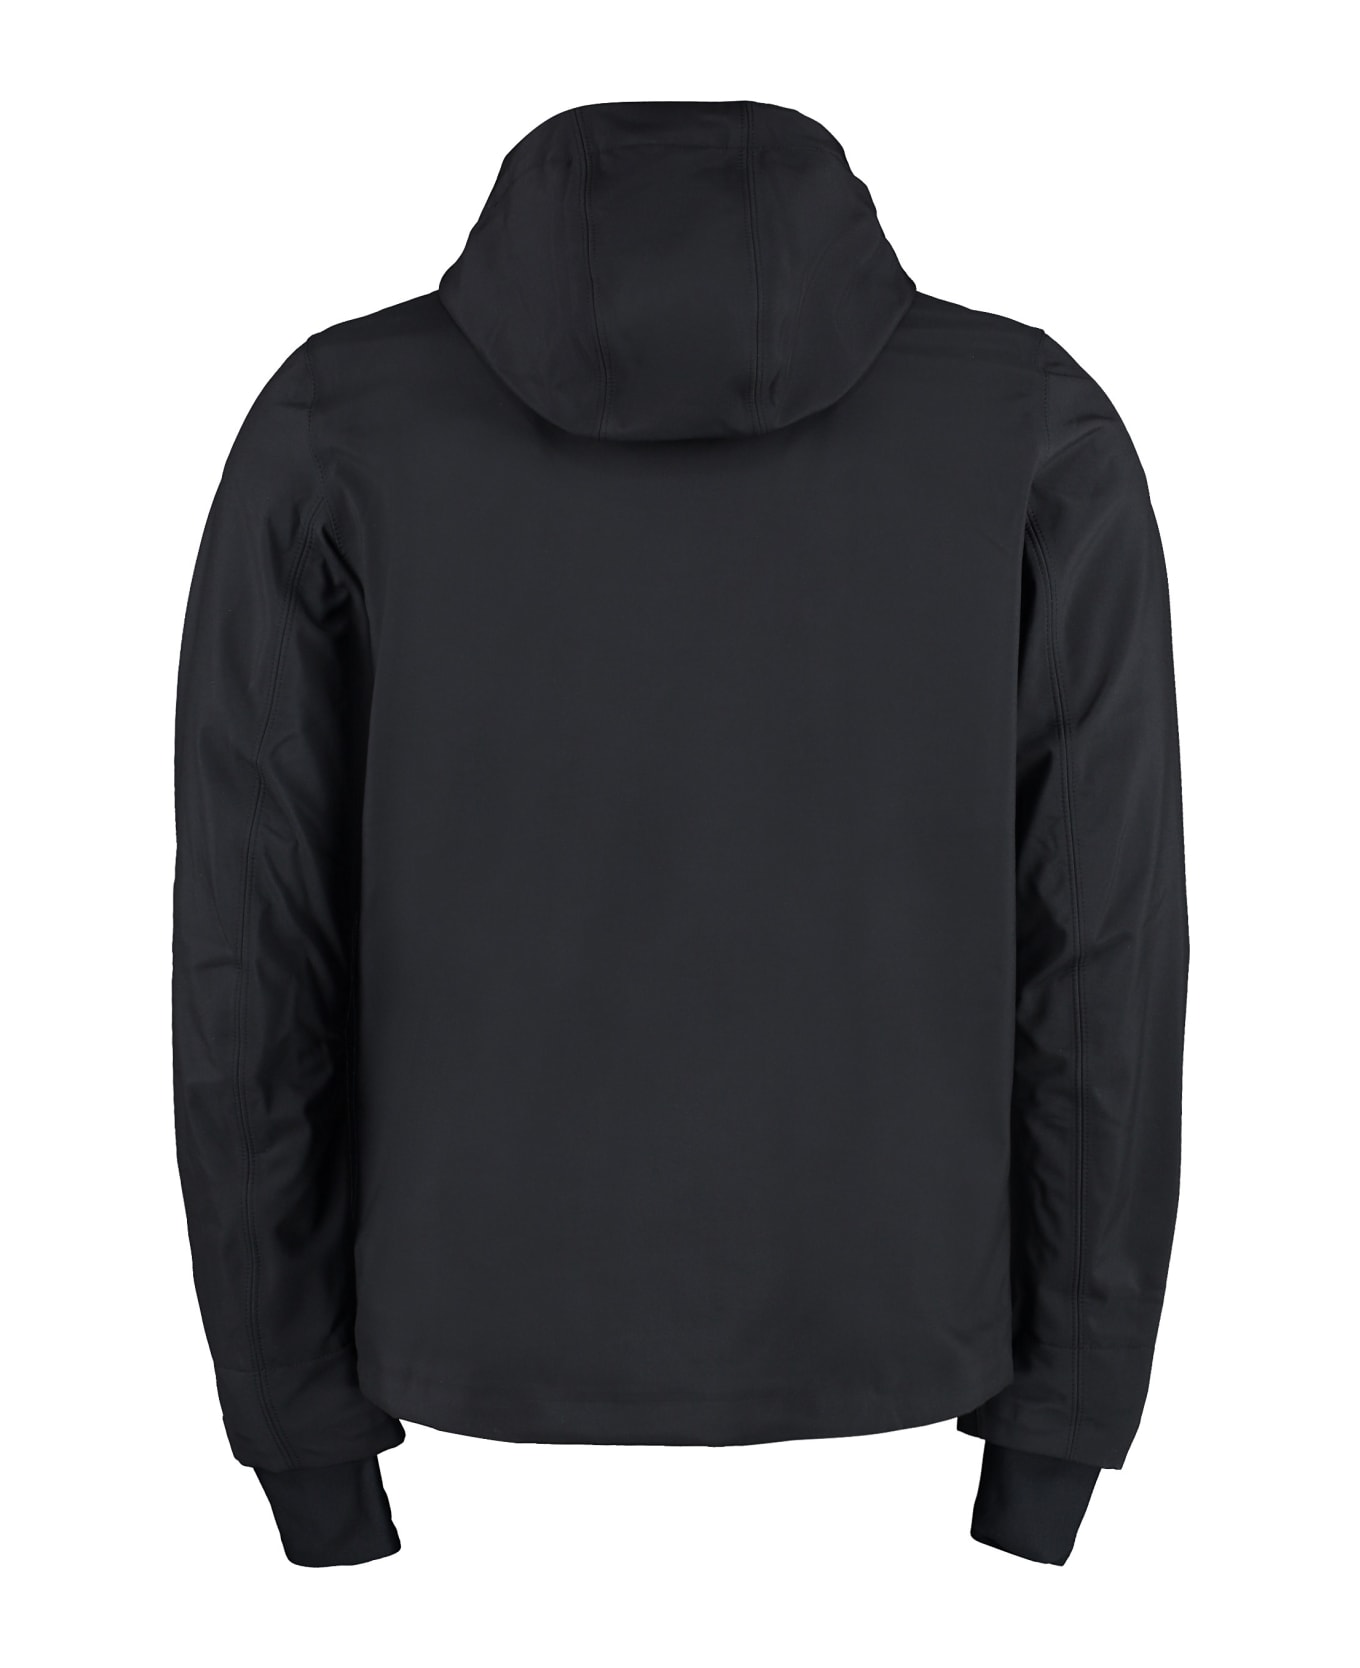 K-Way Jacko Technical Fabric Hooded Jacket - black